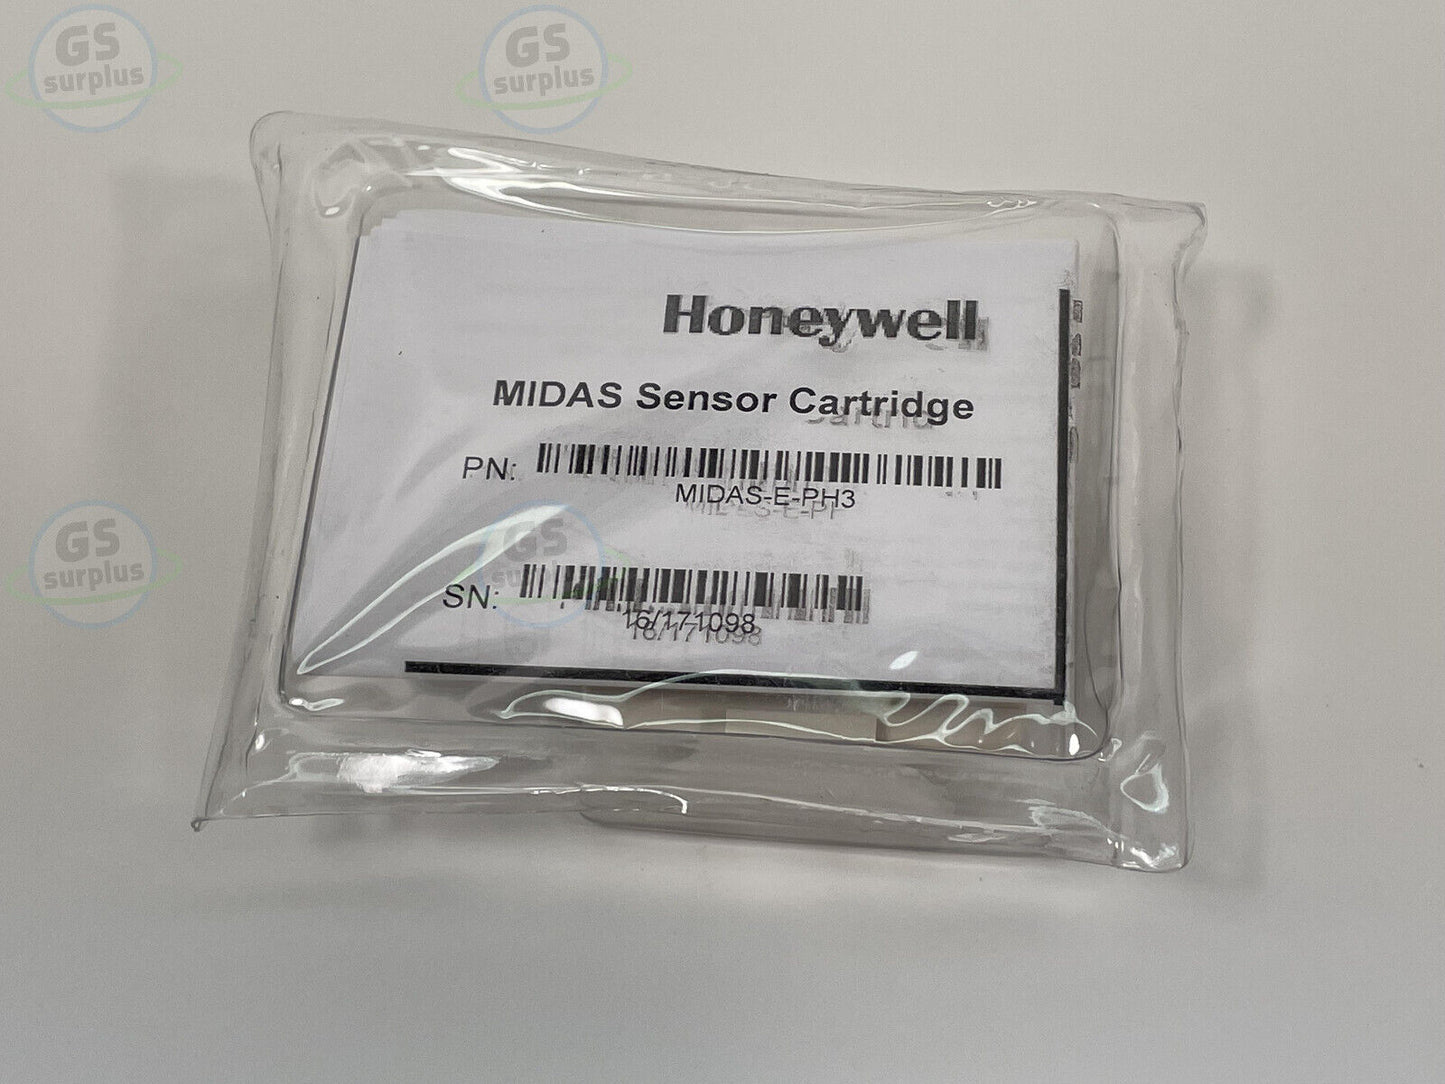 Honeywell MIDAS-E-PH3 / MIDASEPH3 MIDAS Sensor Cartridge